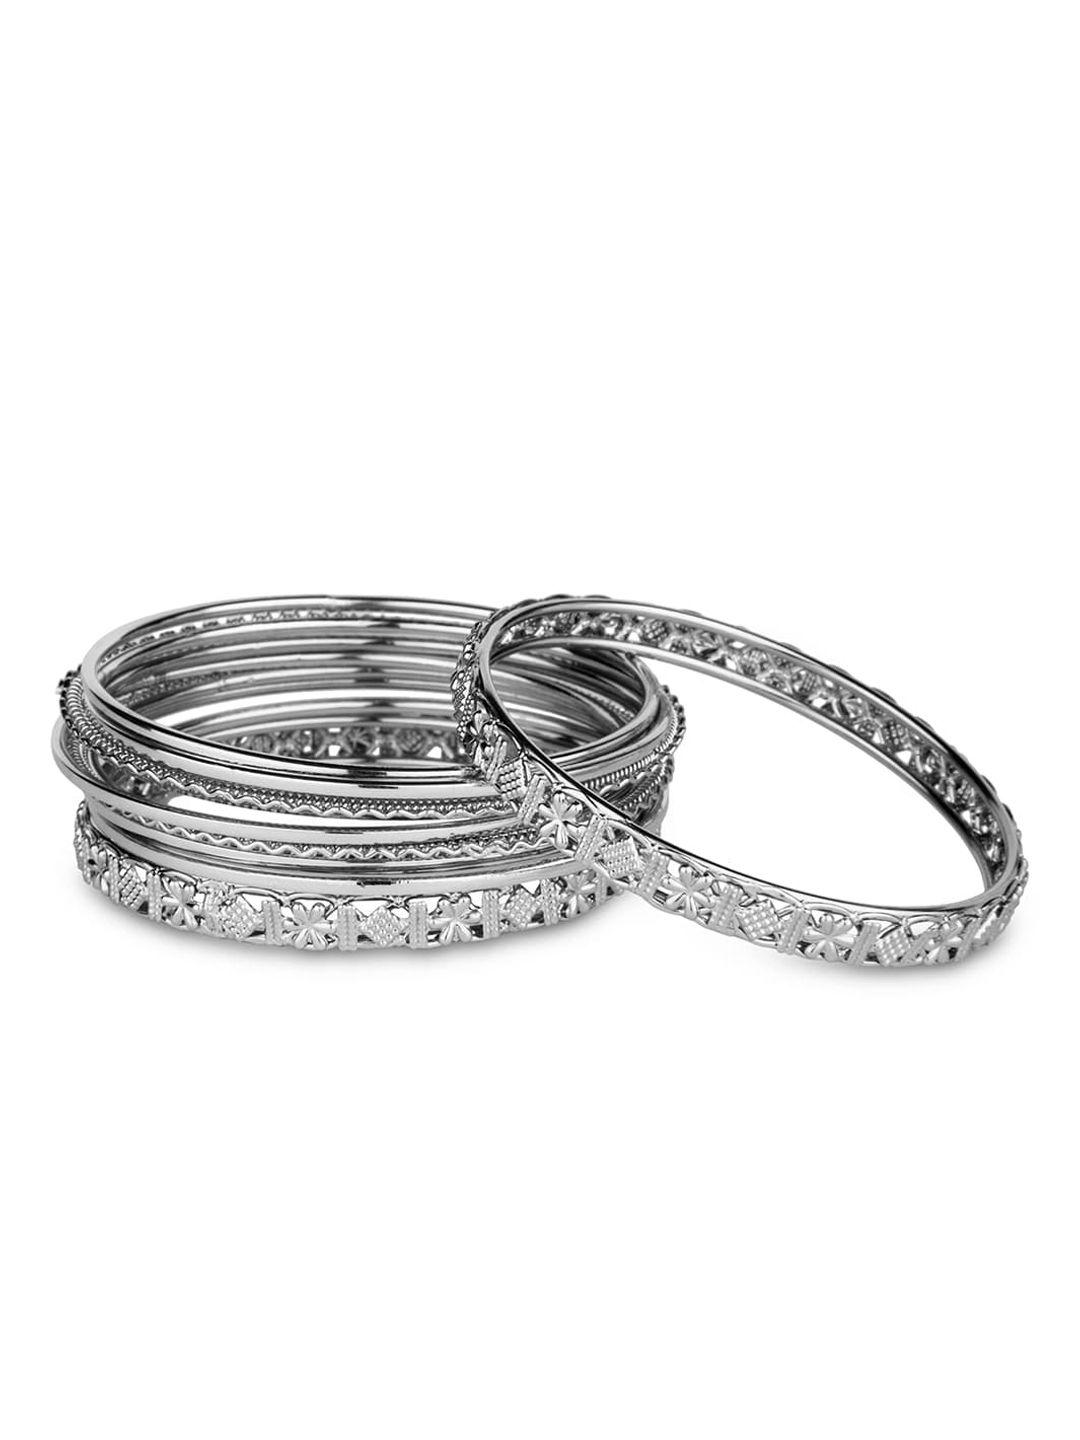 toniq classy silver plated bangles set for women